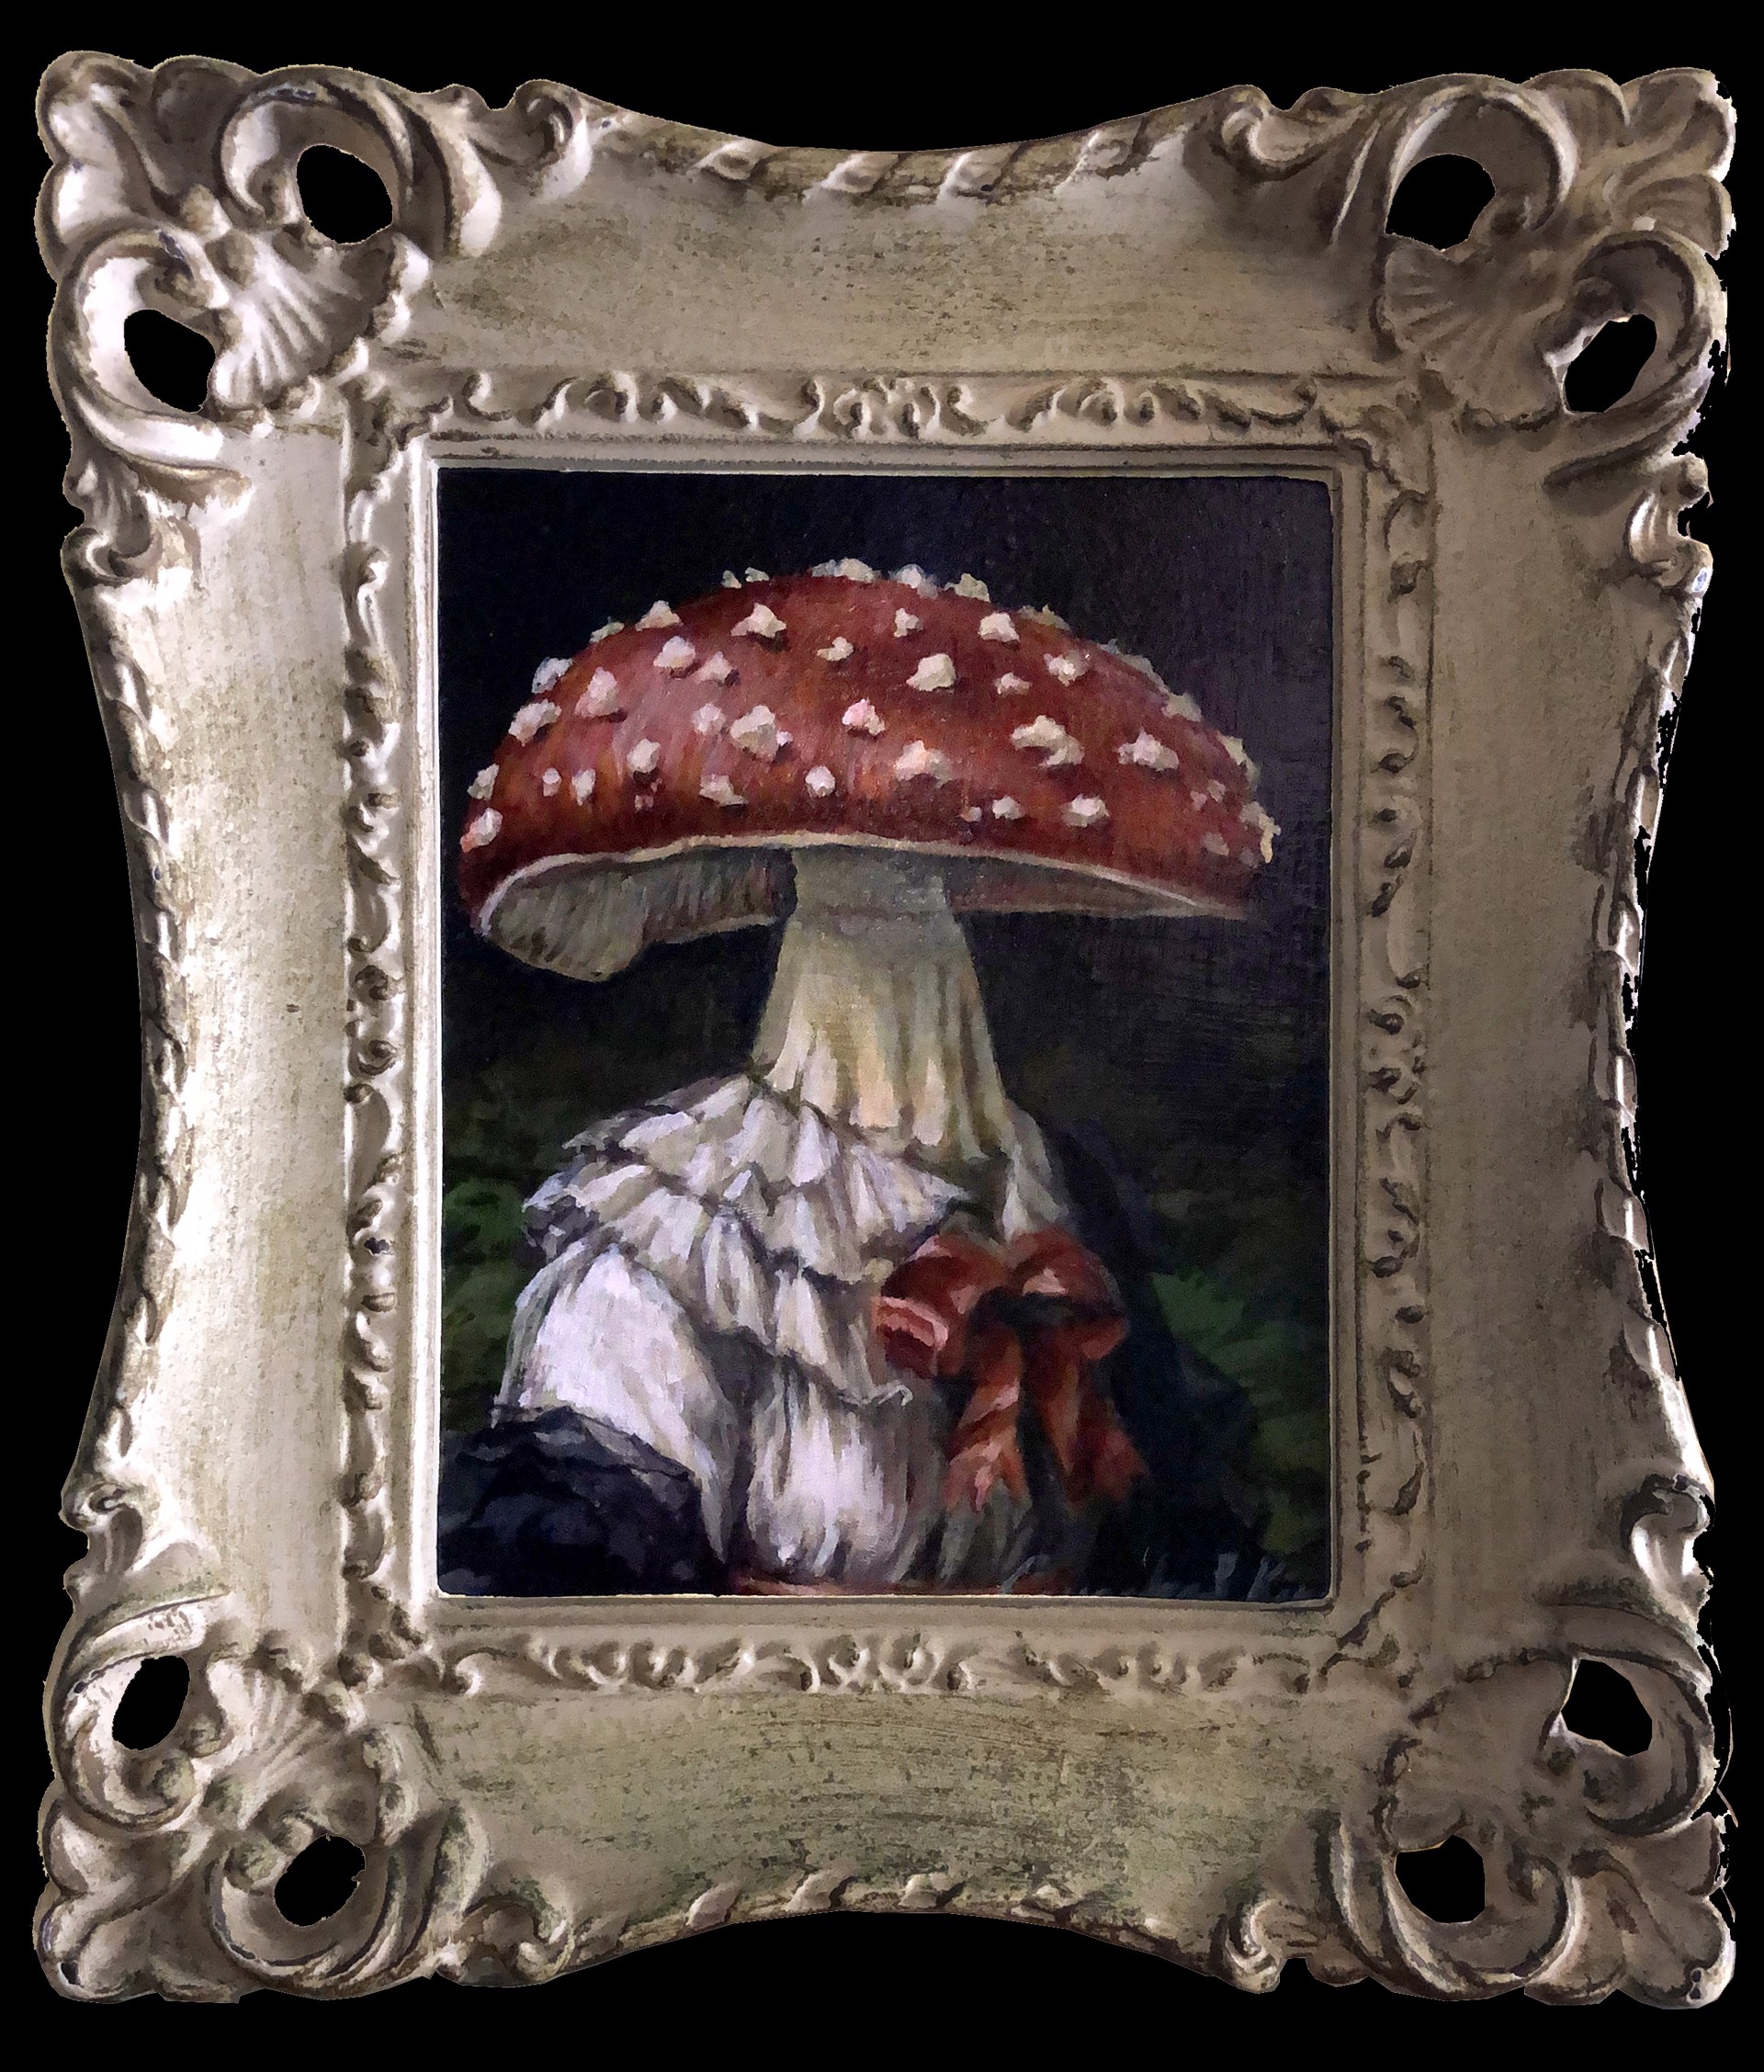 Madam Mushroom by Cassandra Kim